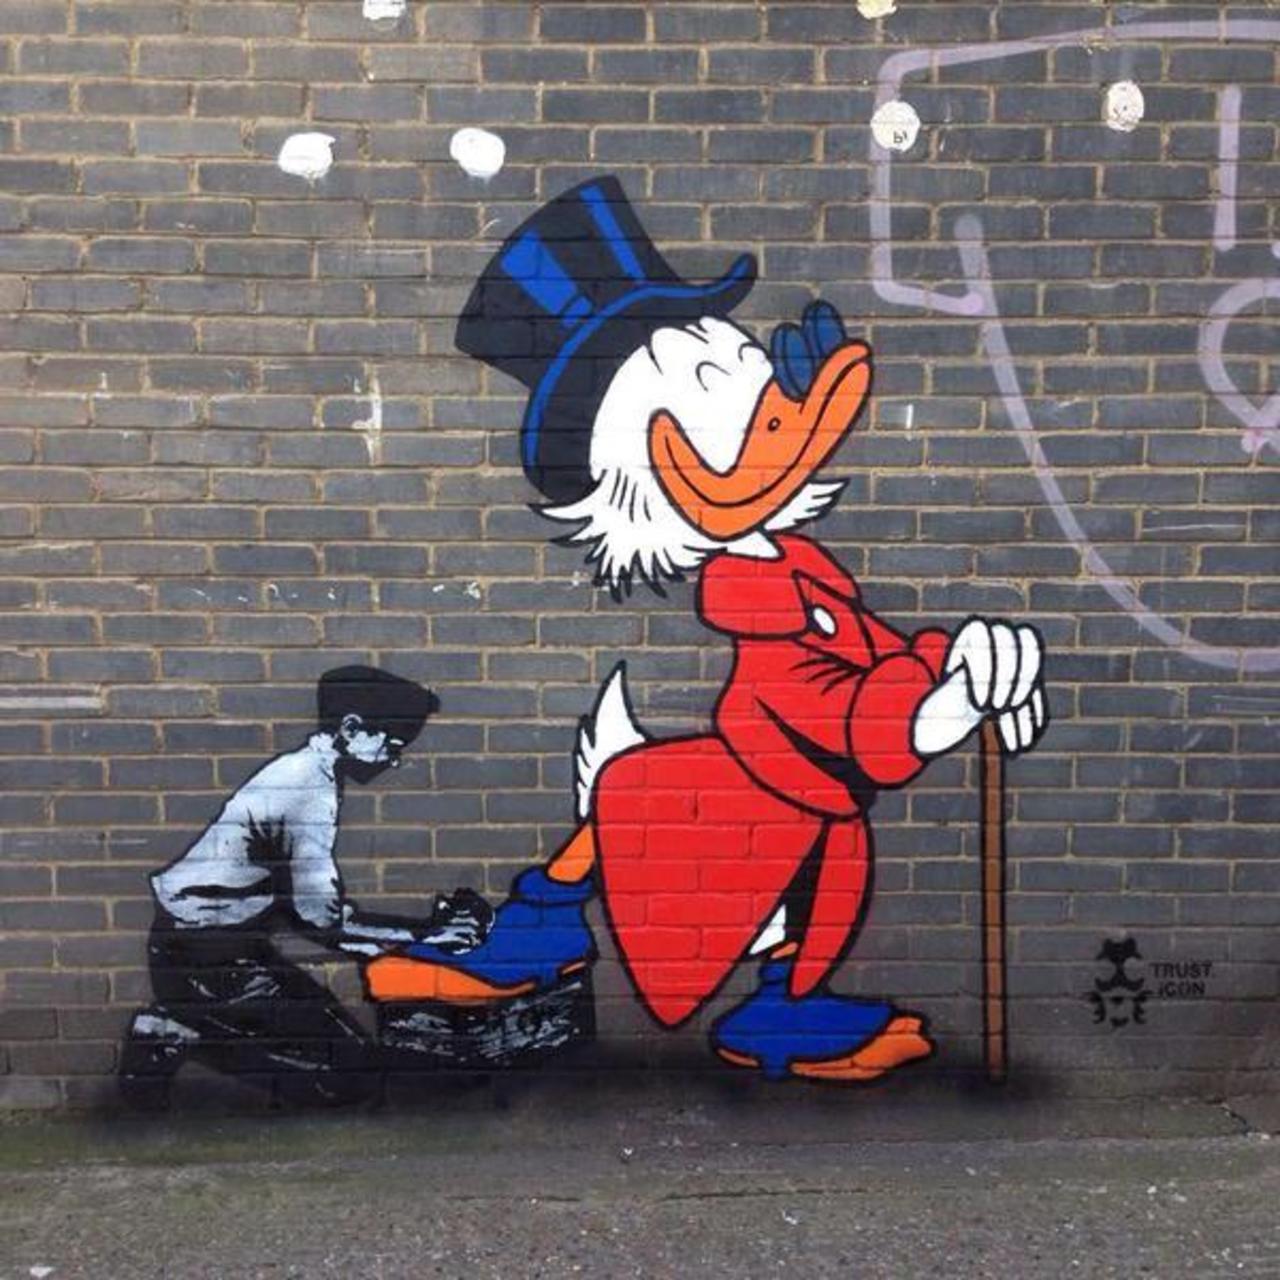 RT @streetartkami: 'Shine Box' 
New Street Art by iCON in Bethnal Green, London 

#art #arte #graffiti #streetart http://t.co/TOZvhoBl7b